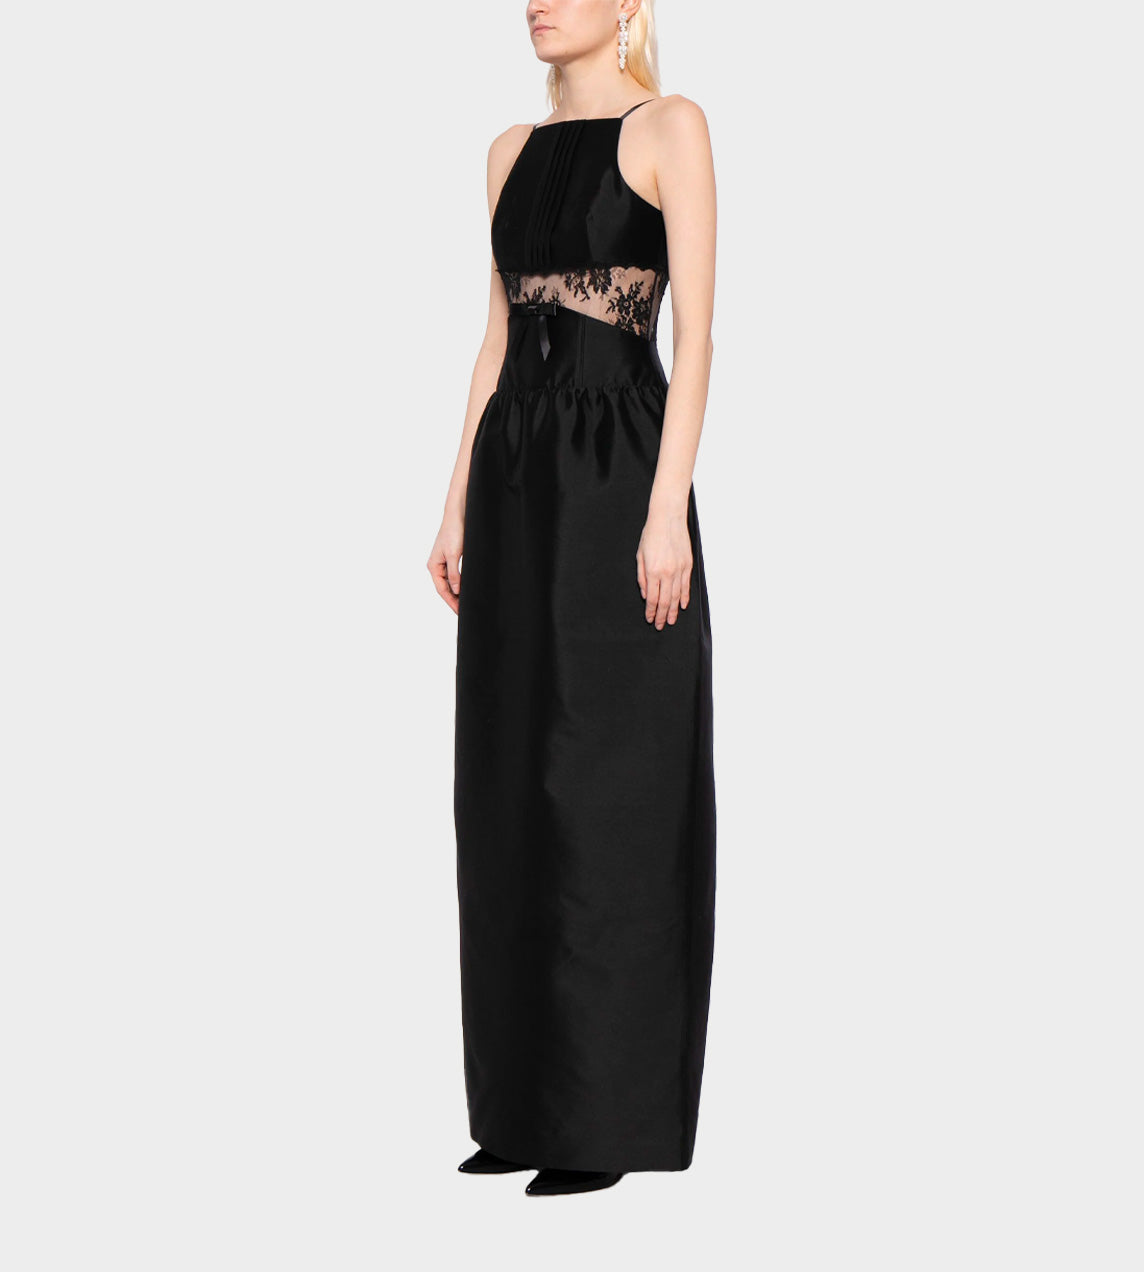 ShuShu/Tong - Lace Inset Gown Black